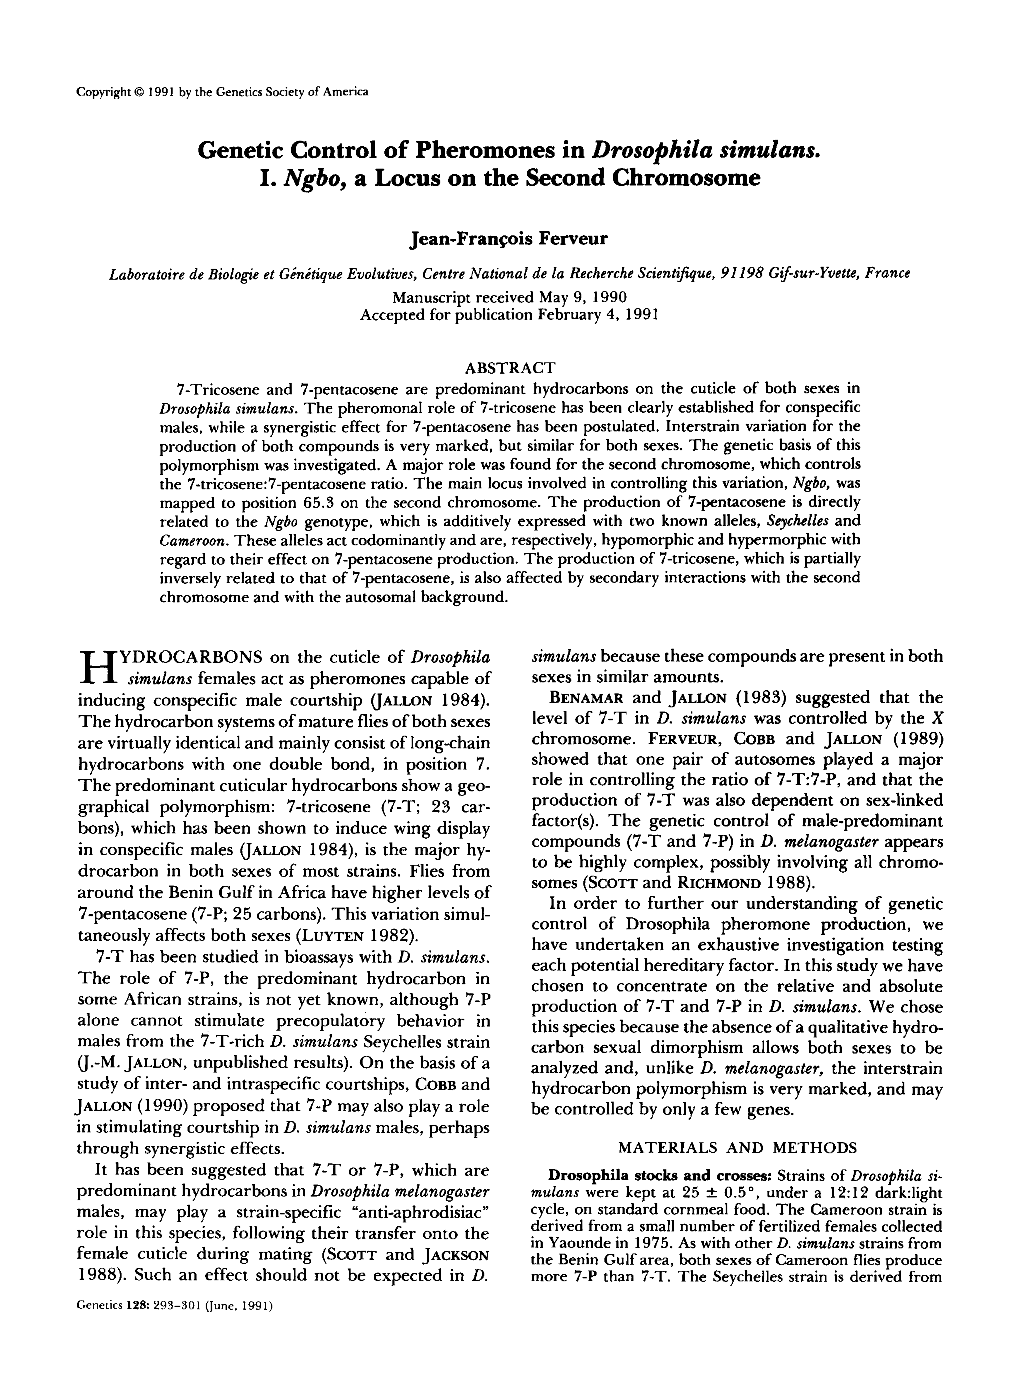 Genetic Control of Pheromones in Drosophila Simulans. I. Ngbo, a Locus on the Second Chromosome